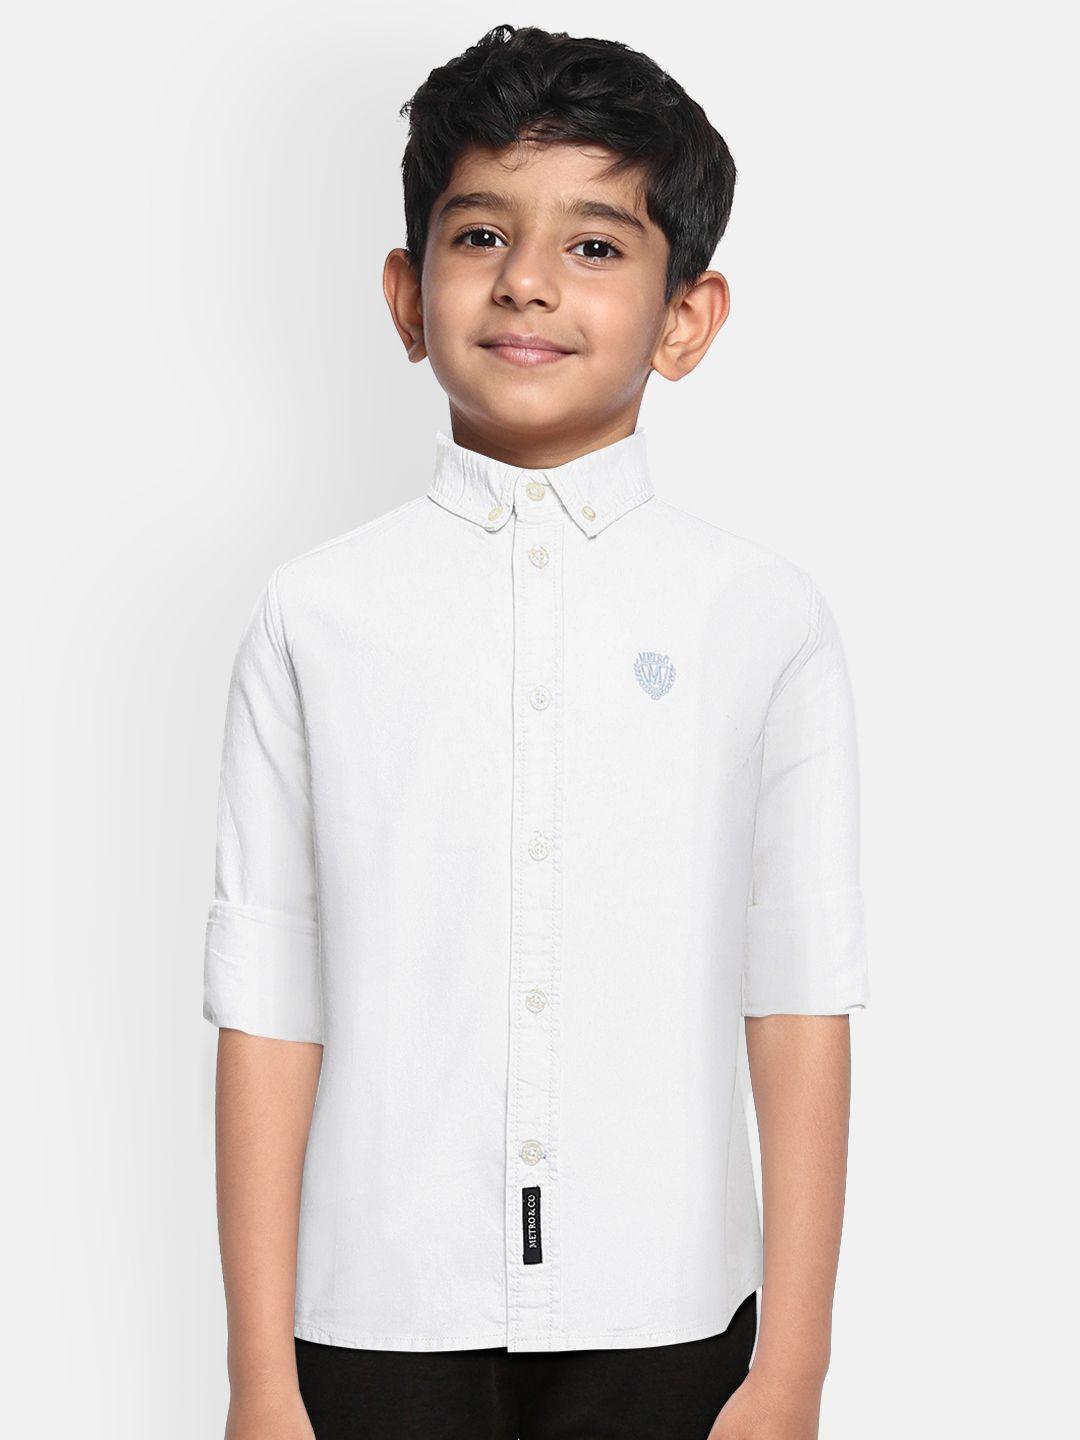 metro kids company boys white organic cotton casual shirt